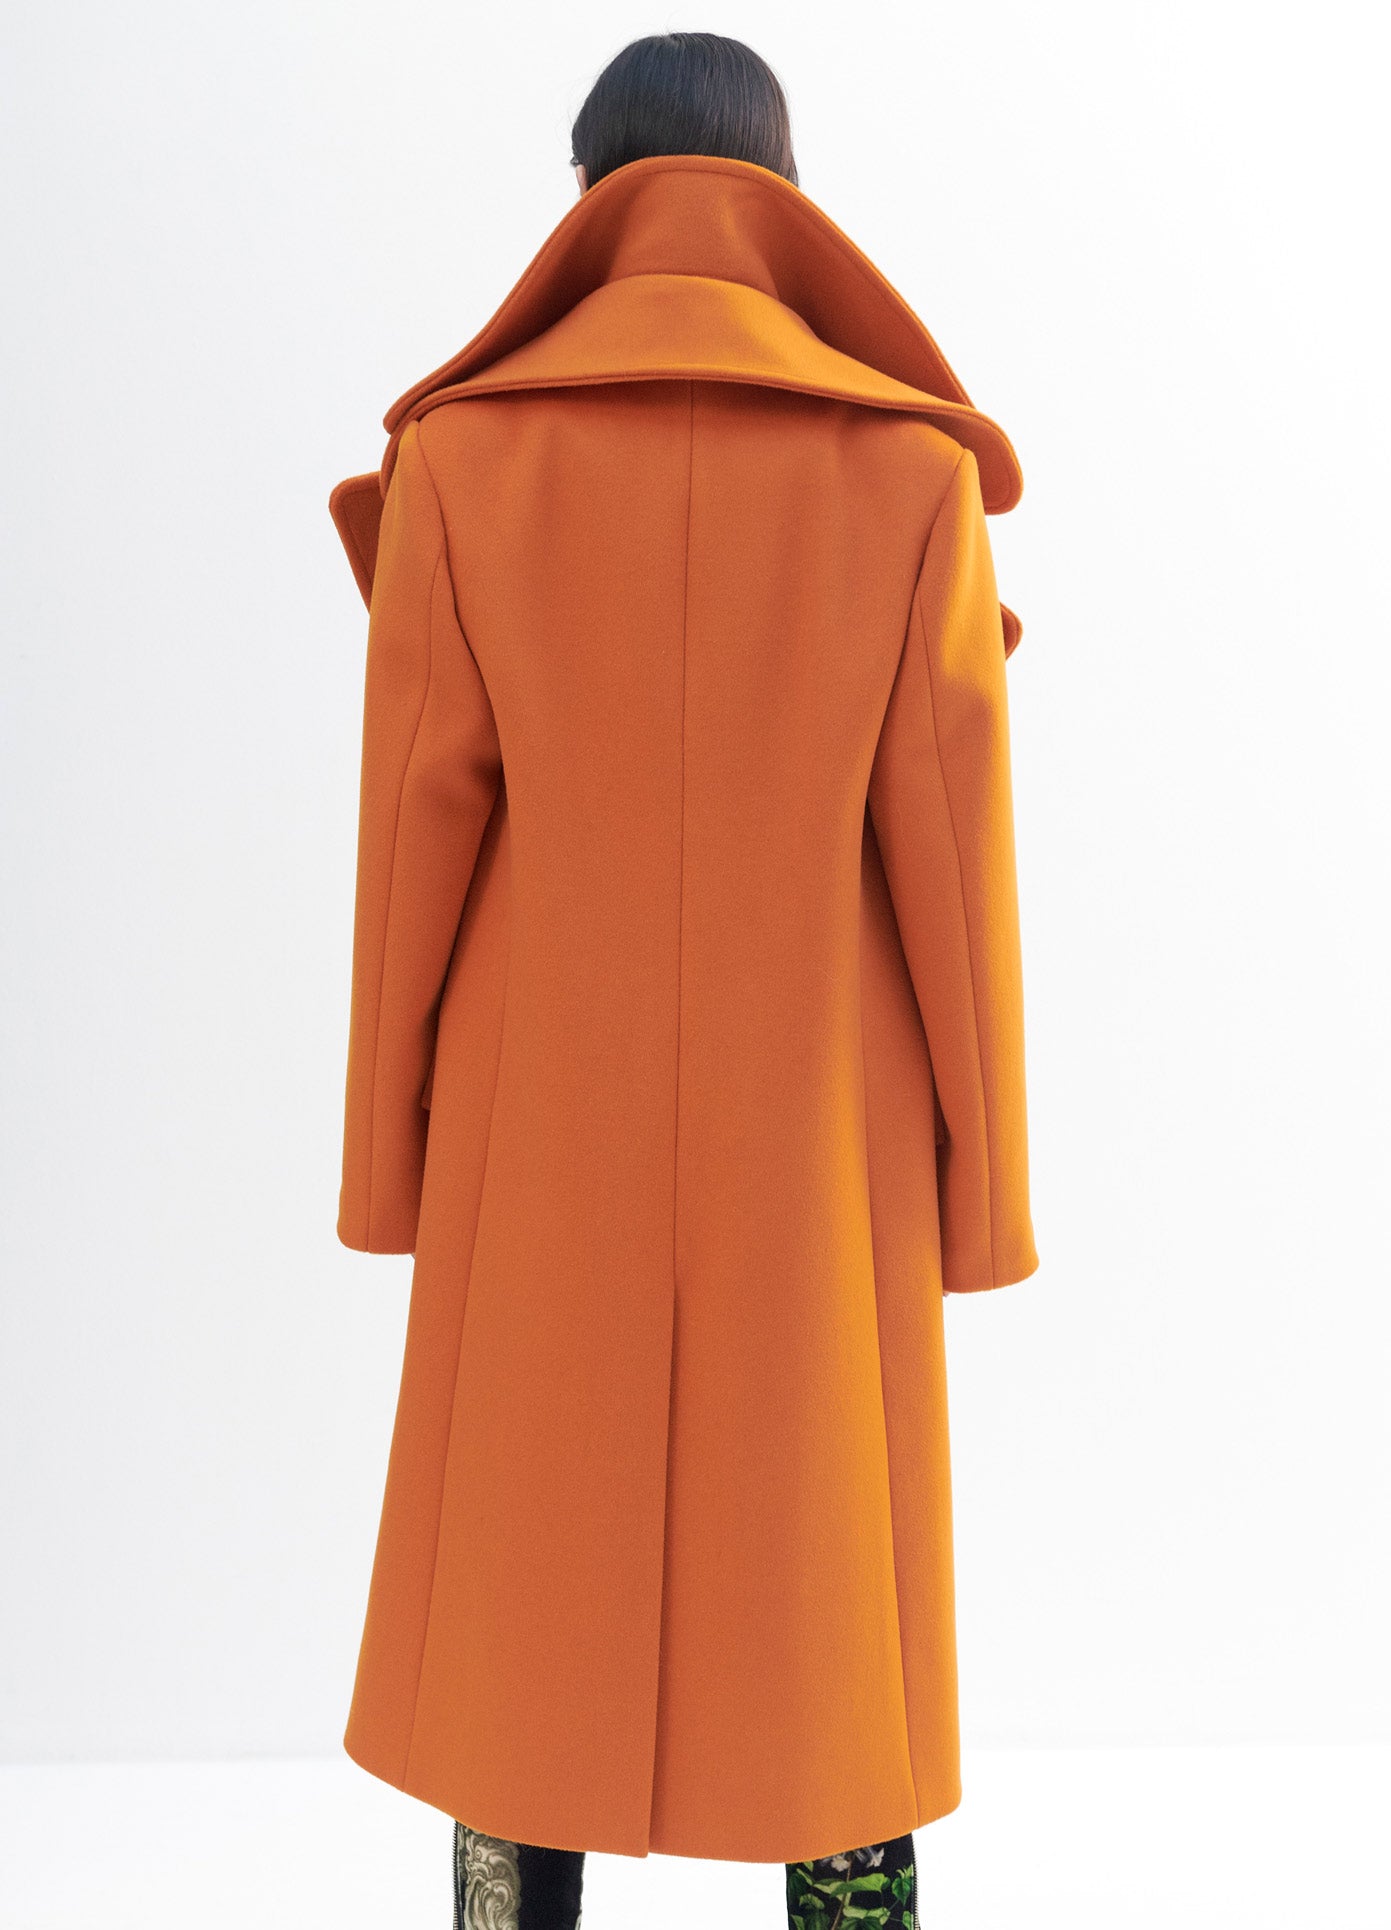 Double Collar Coat in Orange Double Faced Wool